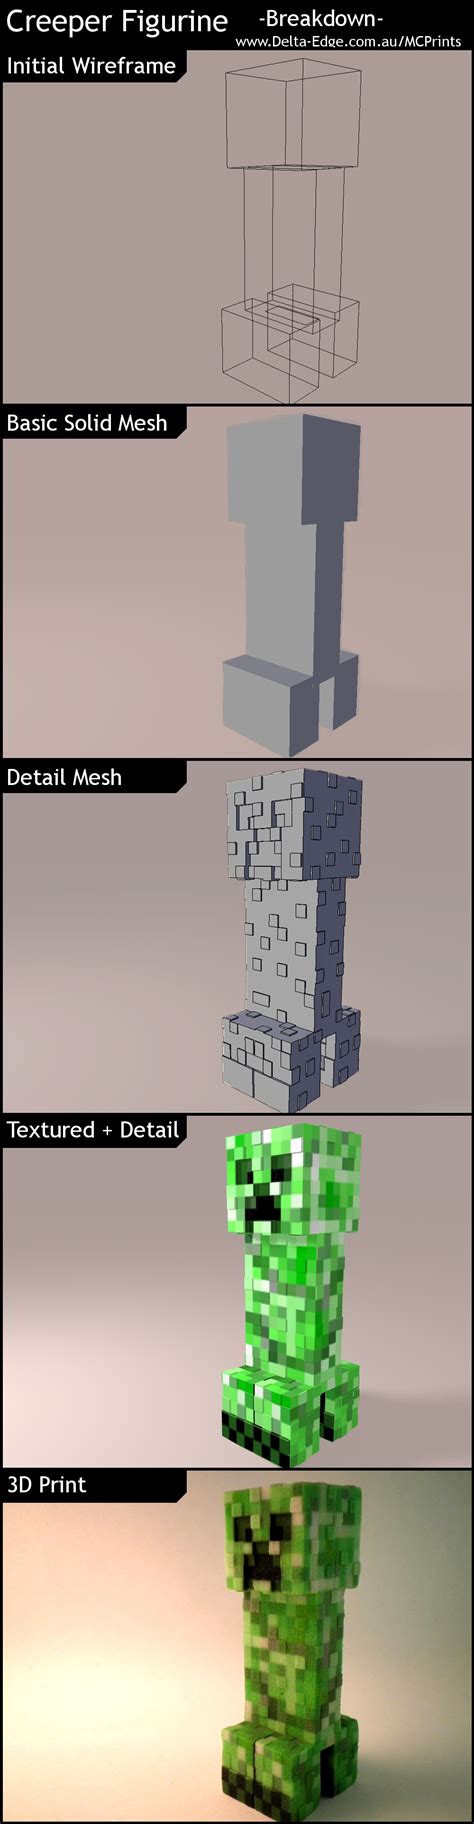 Minecraft Creeper Digital To 3d Print Process By Adedgedeviantart